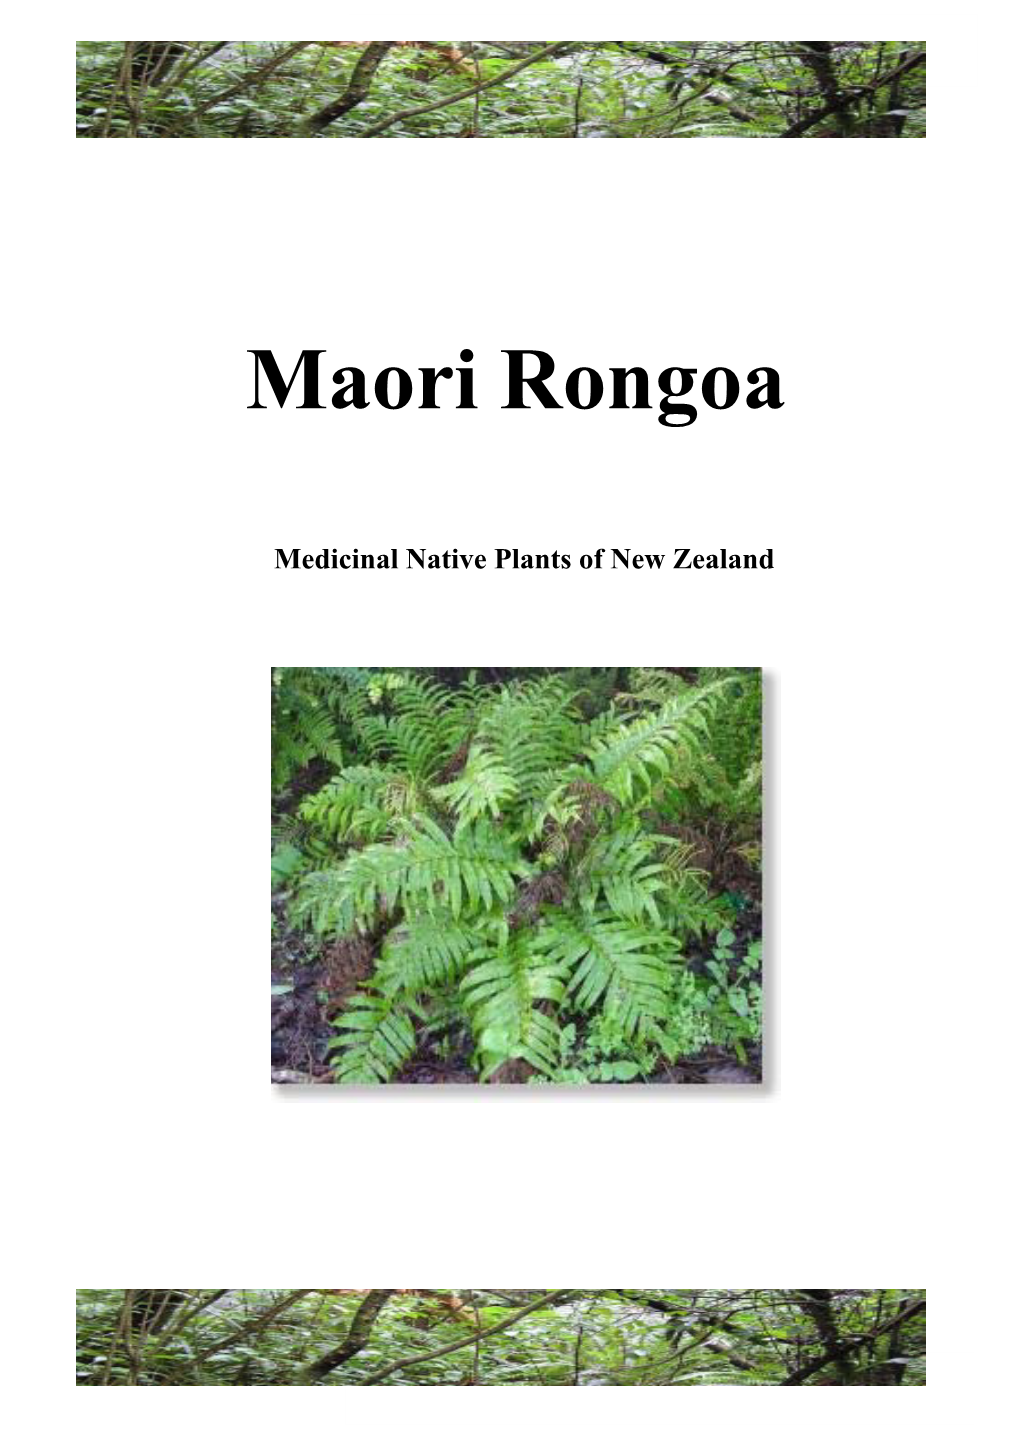 Rongoa Maori, Medicinal Native Plants of New Zealand